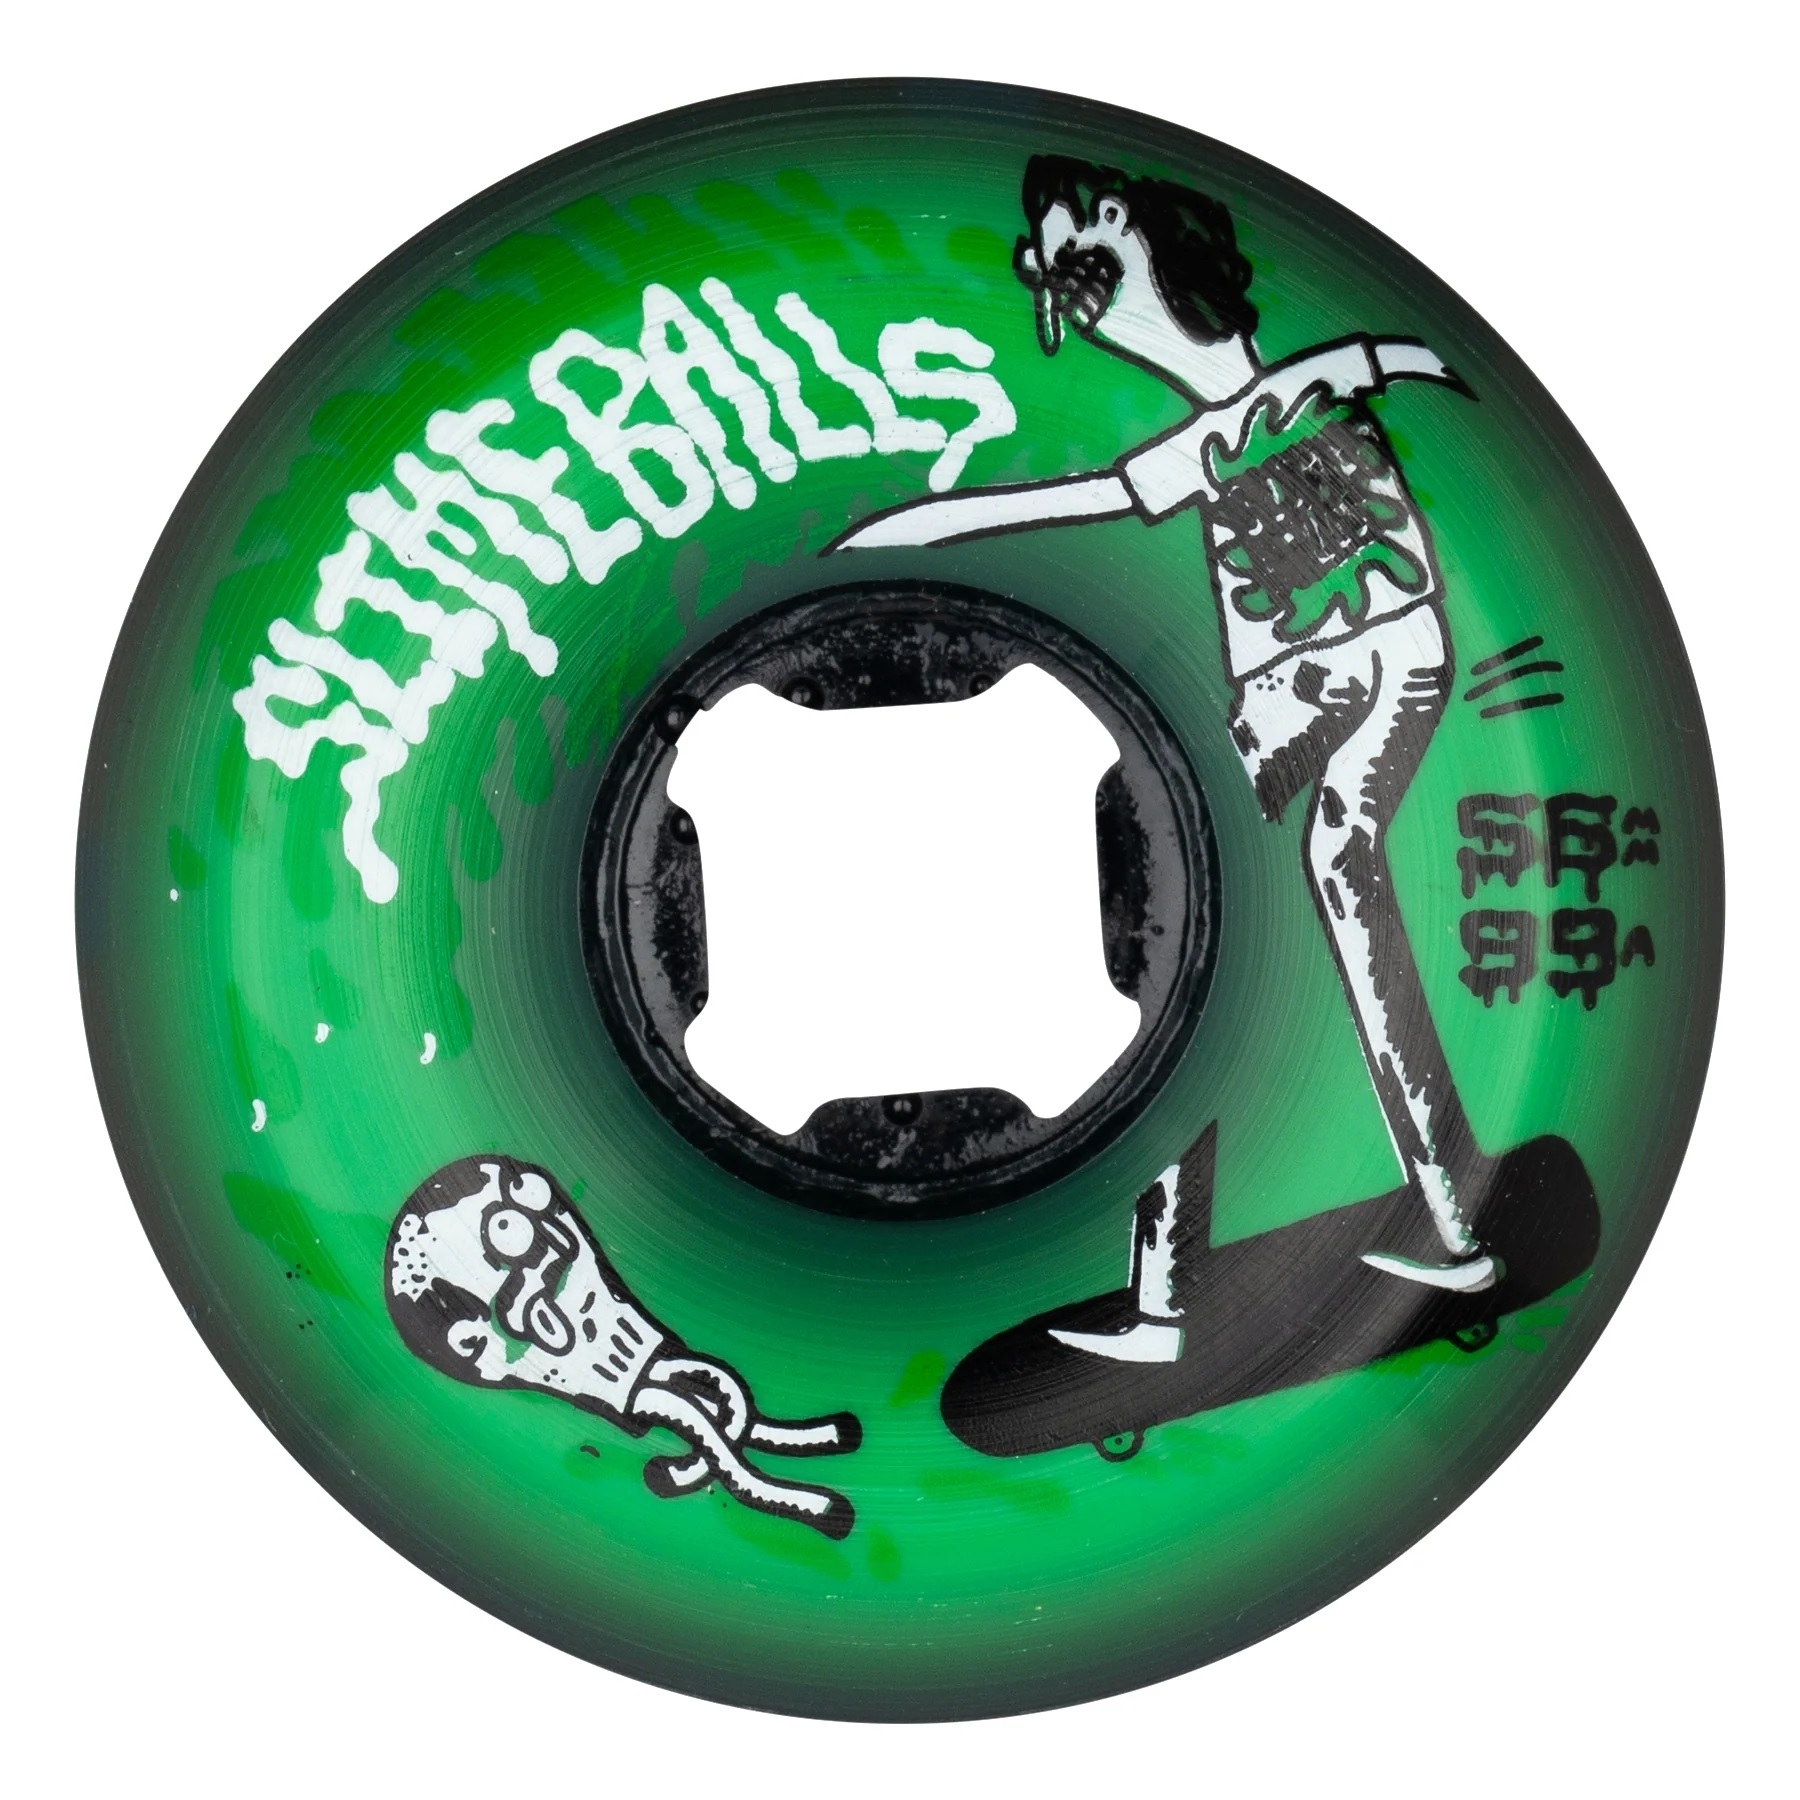 Jay Howell Speed Balls Wheels (Green)